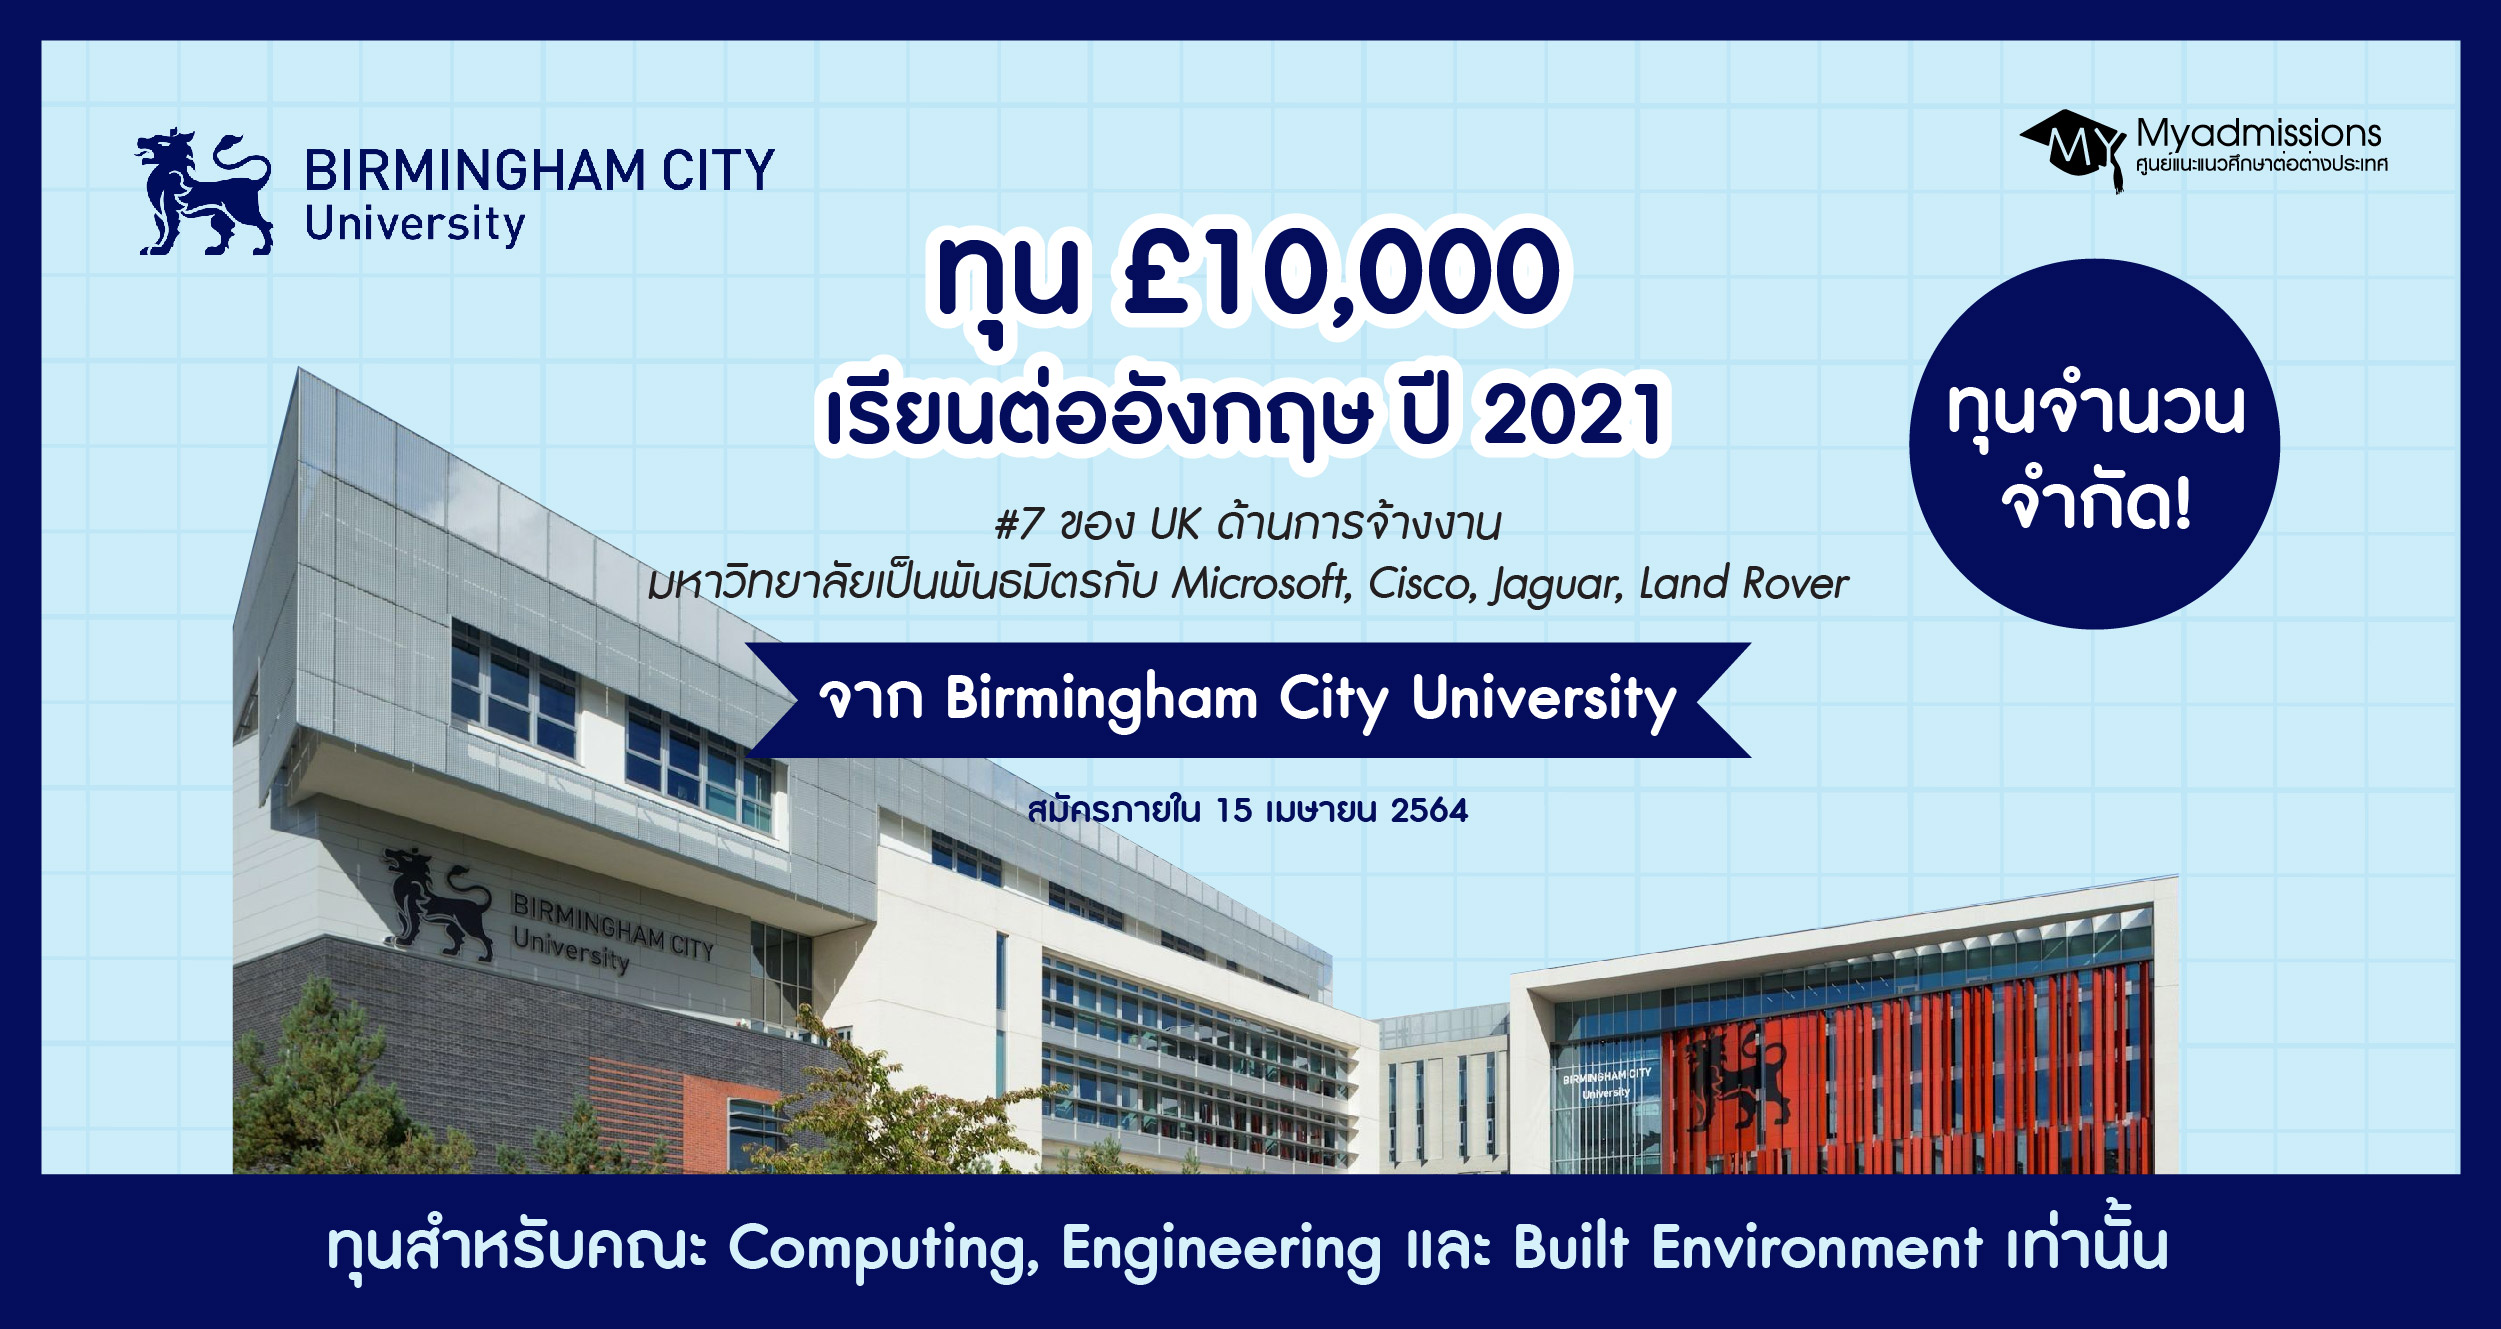 Birmingham City University Scholarship 2021  Myadmissions